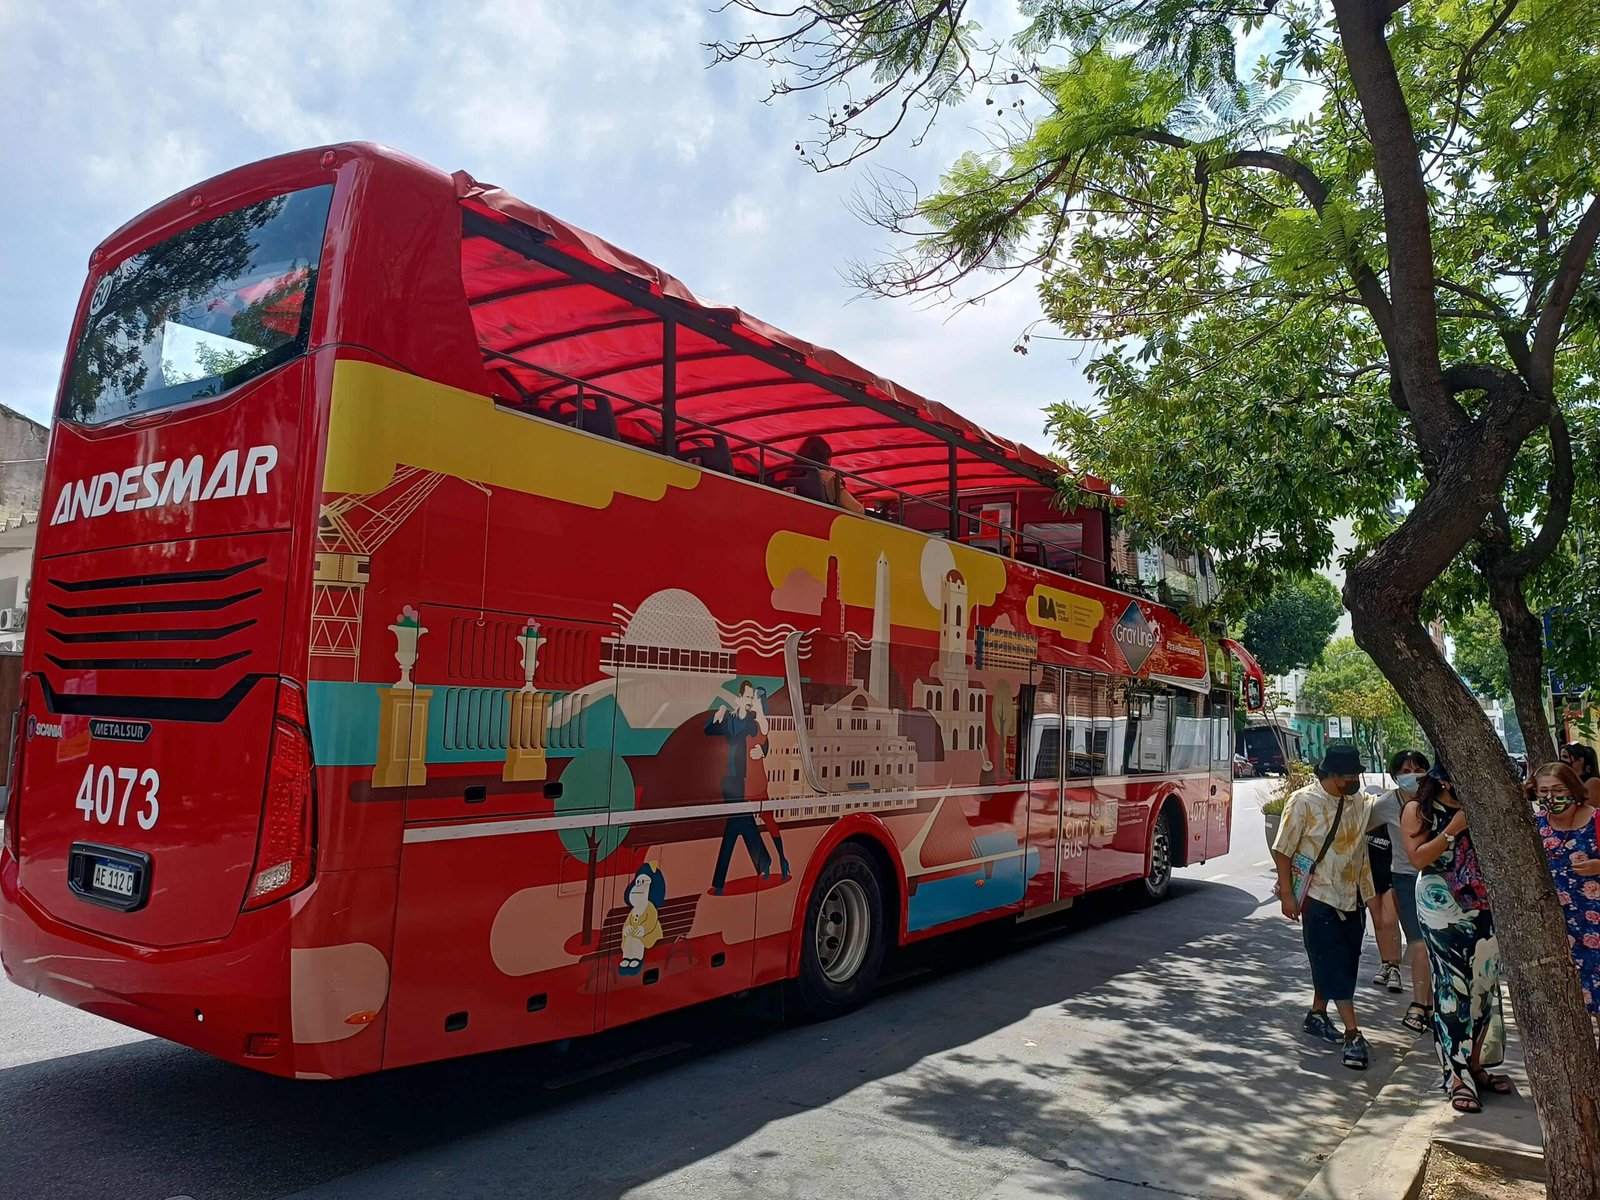 autobus turistico rojo recorriendo la ciudad scaled